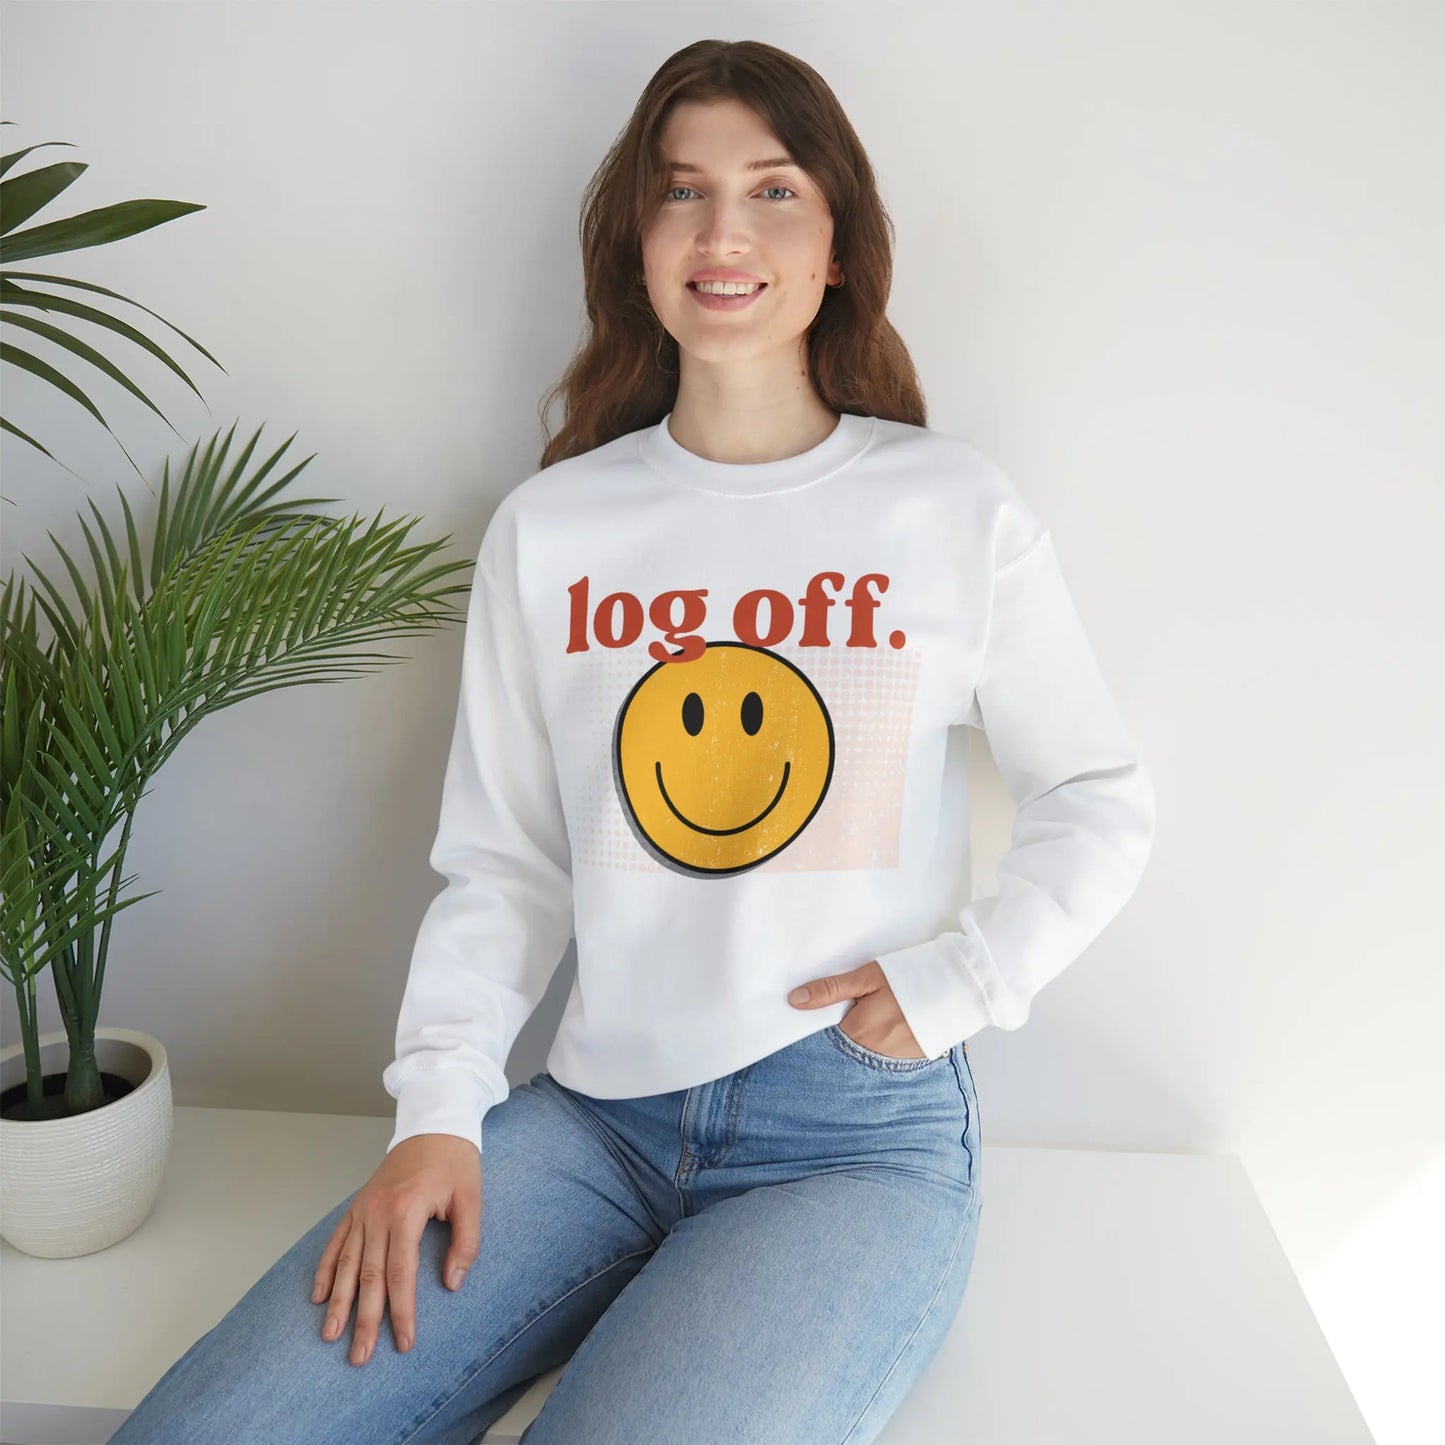 Stay Present with Retro 'Log Off' Smiley Face Sweatshirt - papercraneco